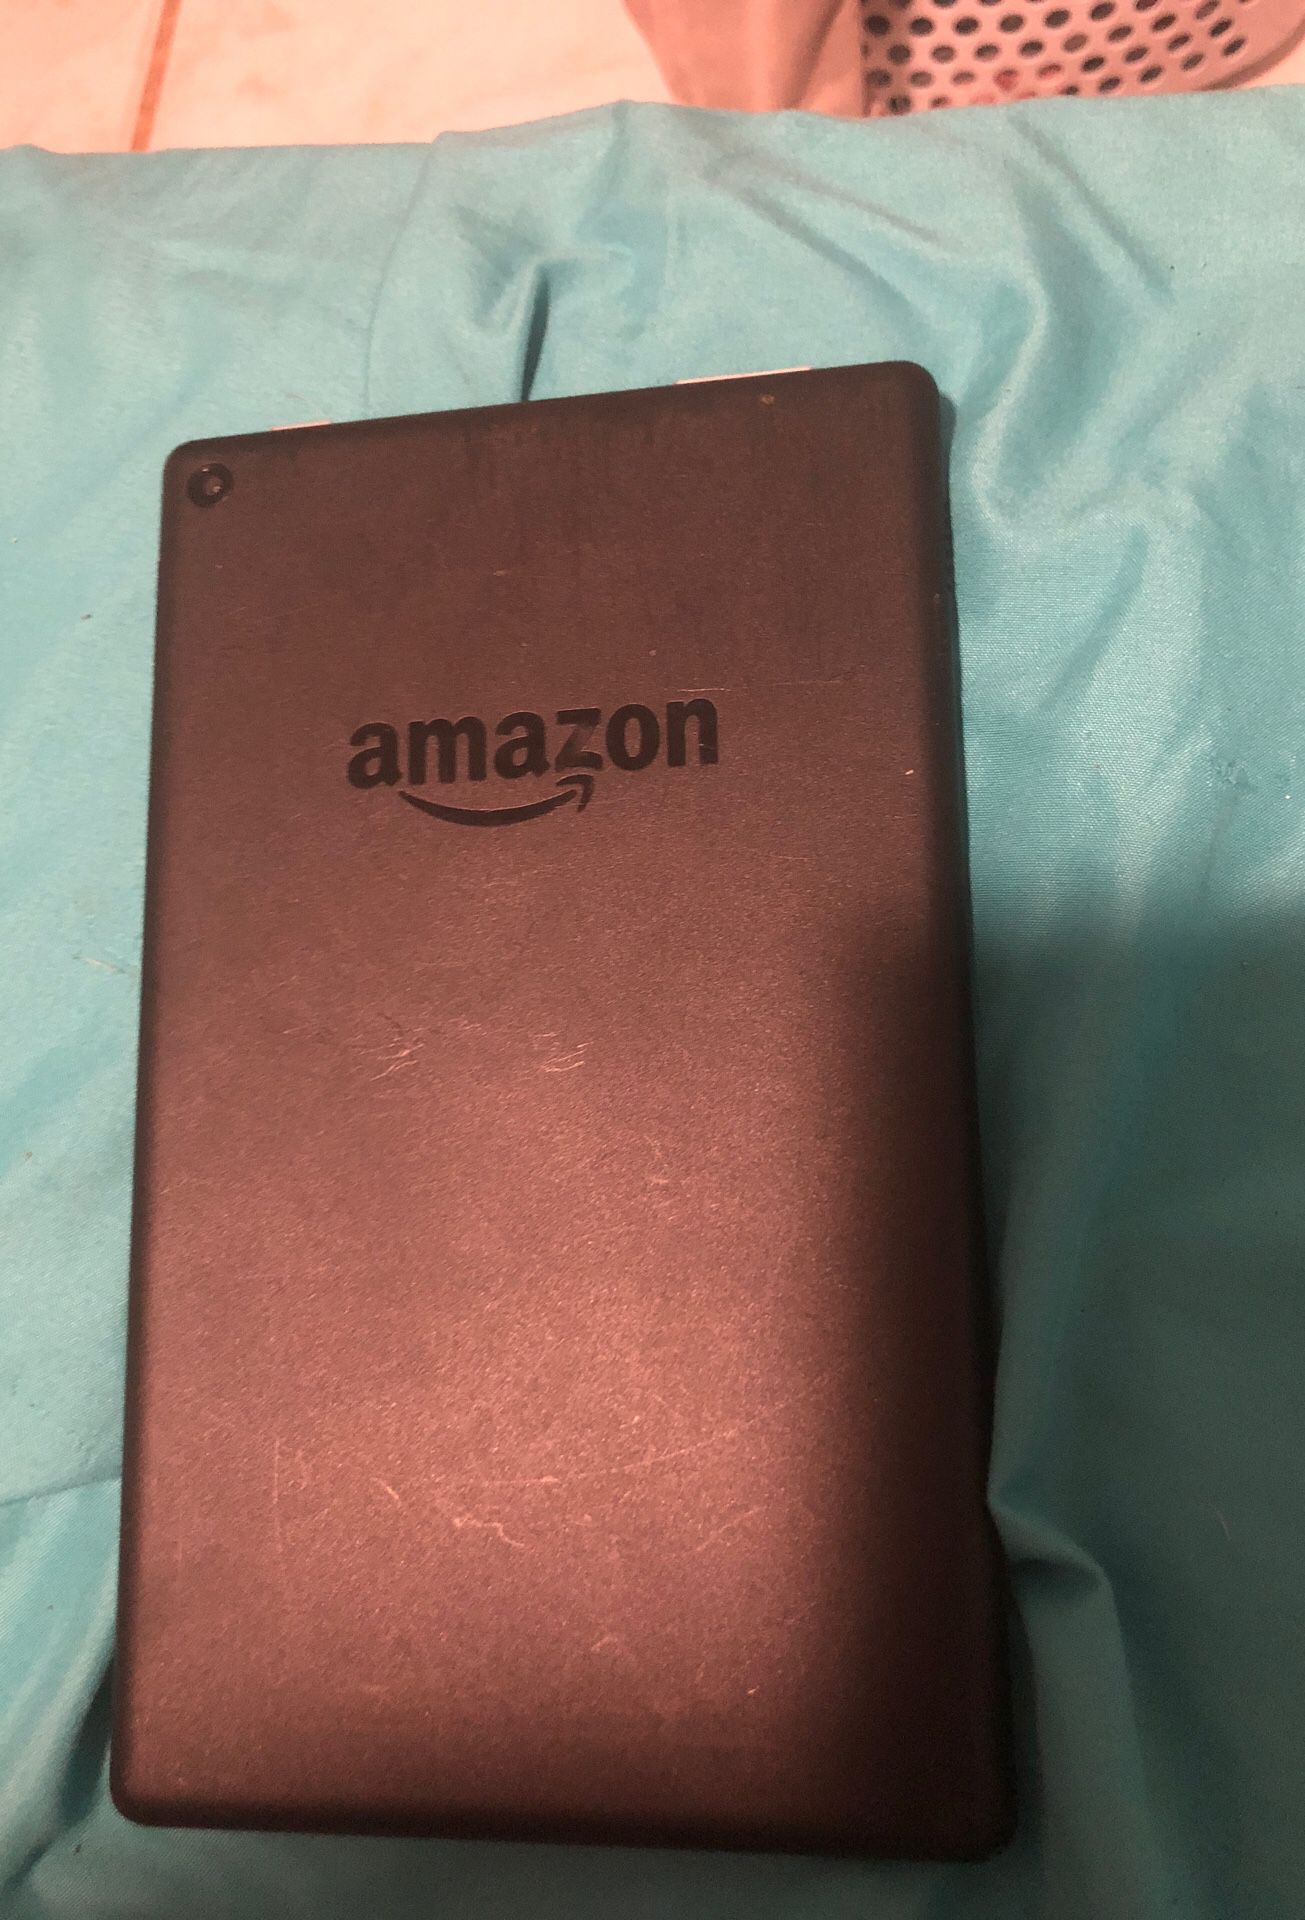 Amazon fire tablet